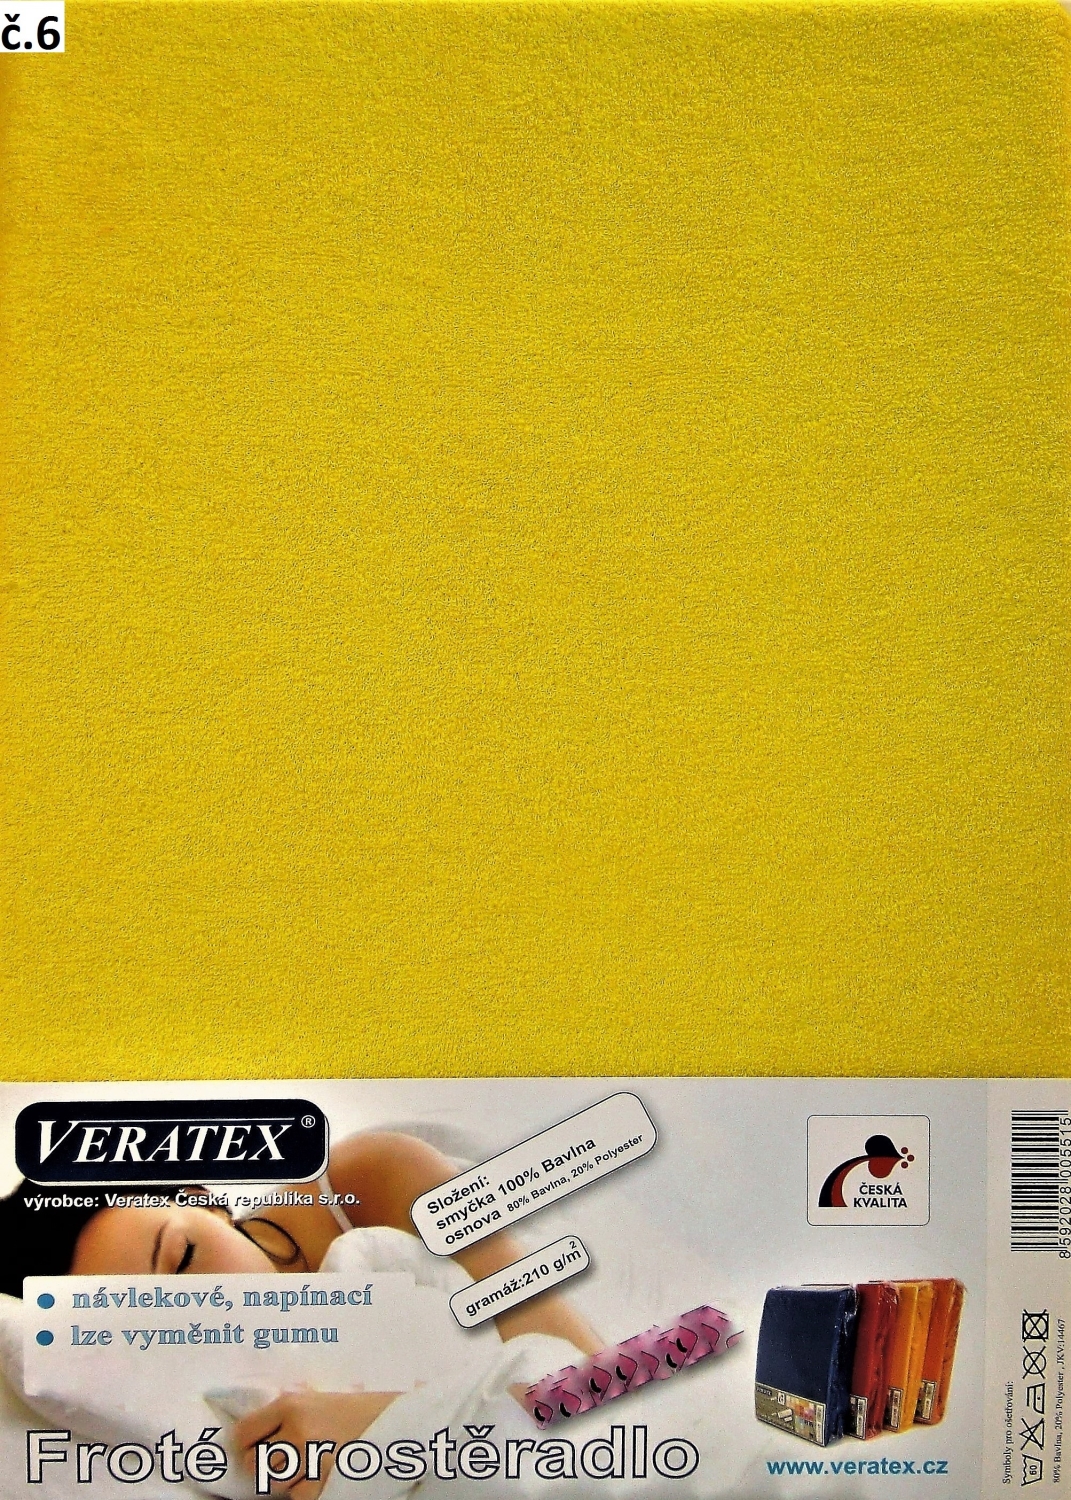 Veratex Froté prostěradlo postýlka 70x160/15 cm (č. 6-stř.žlutá)